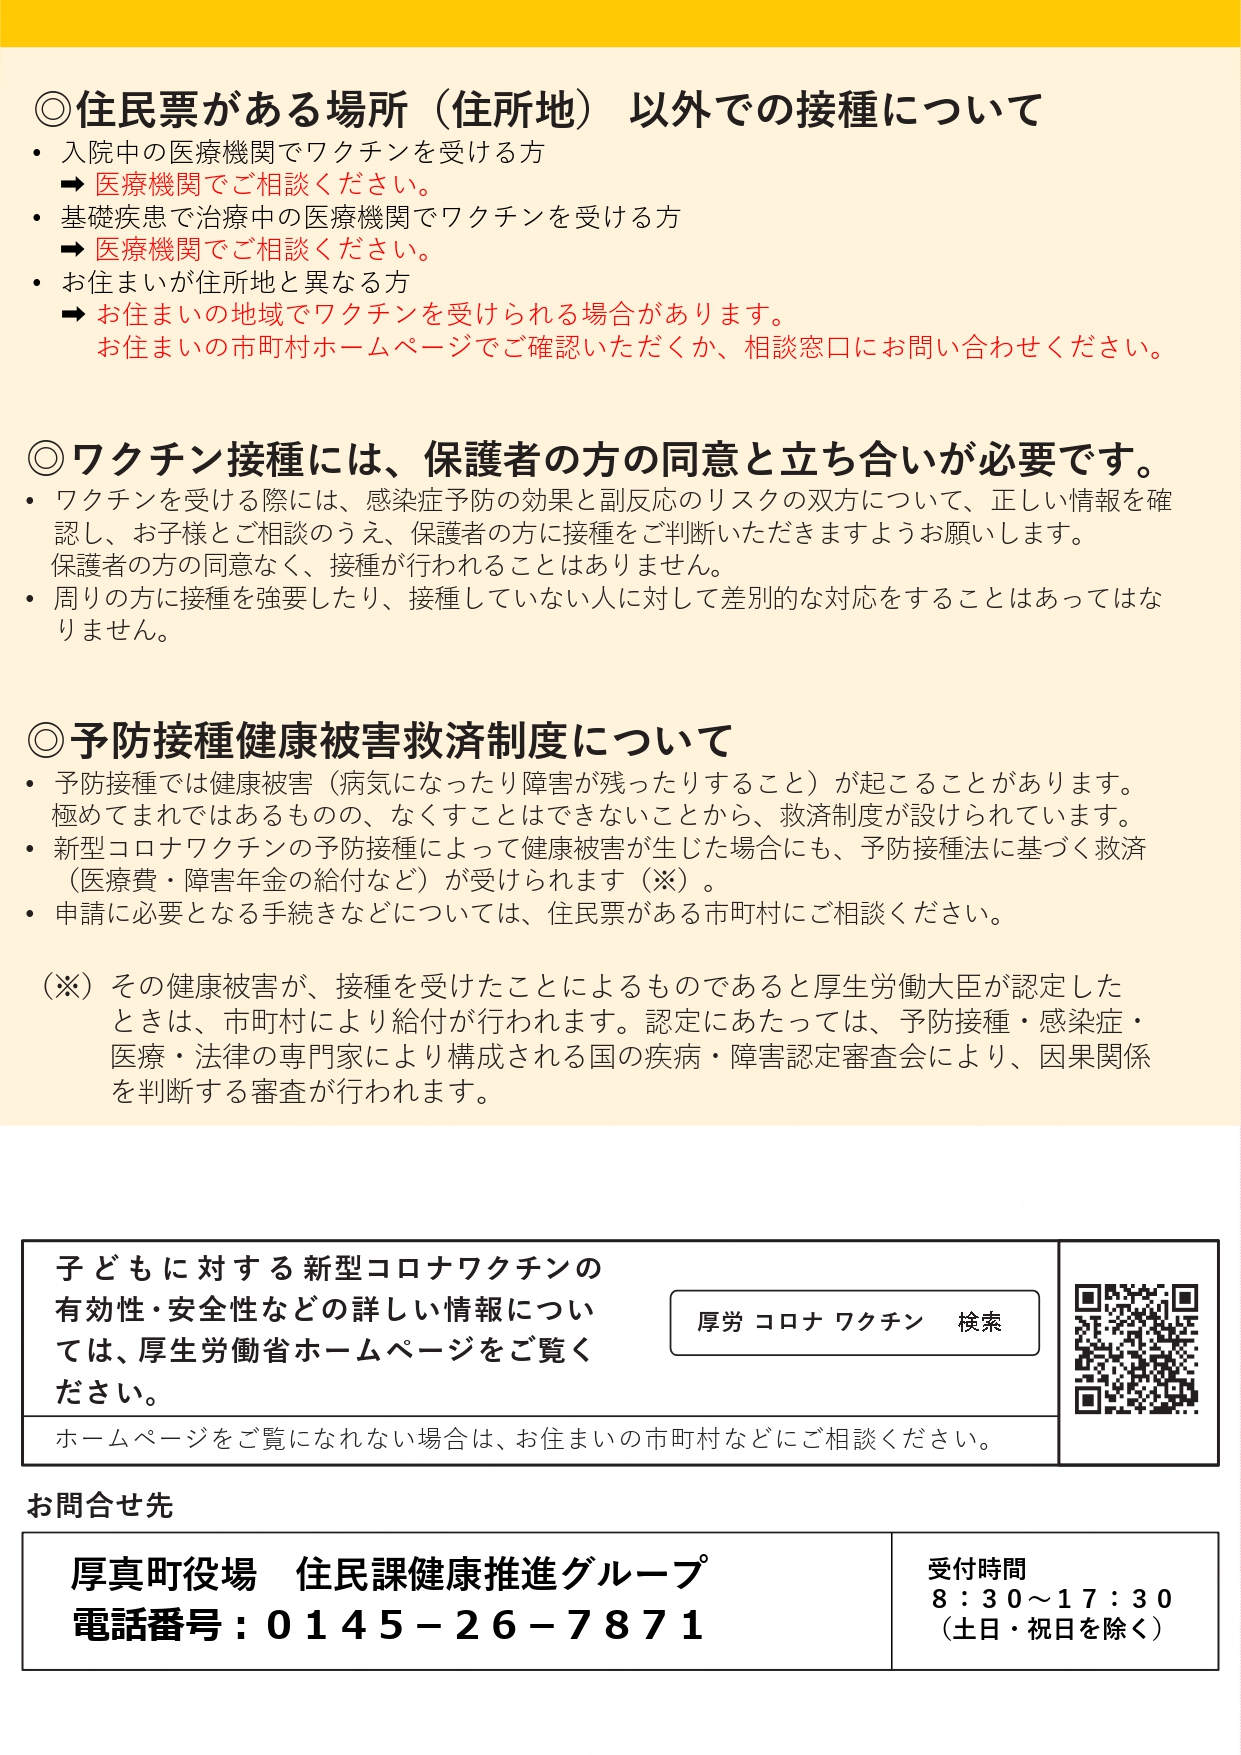 https://www.town.atsuma.lg.jp/office/content/uploads/2022/03/corona_walichin_seigo6-4_2.jpg